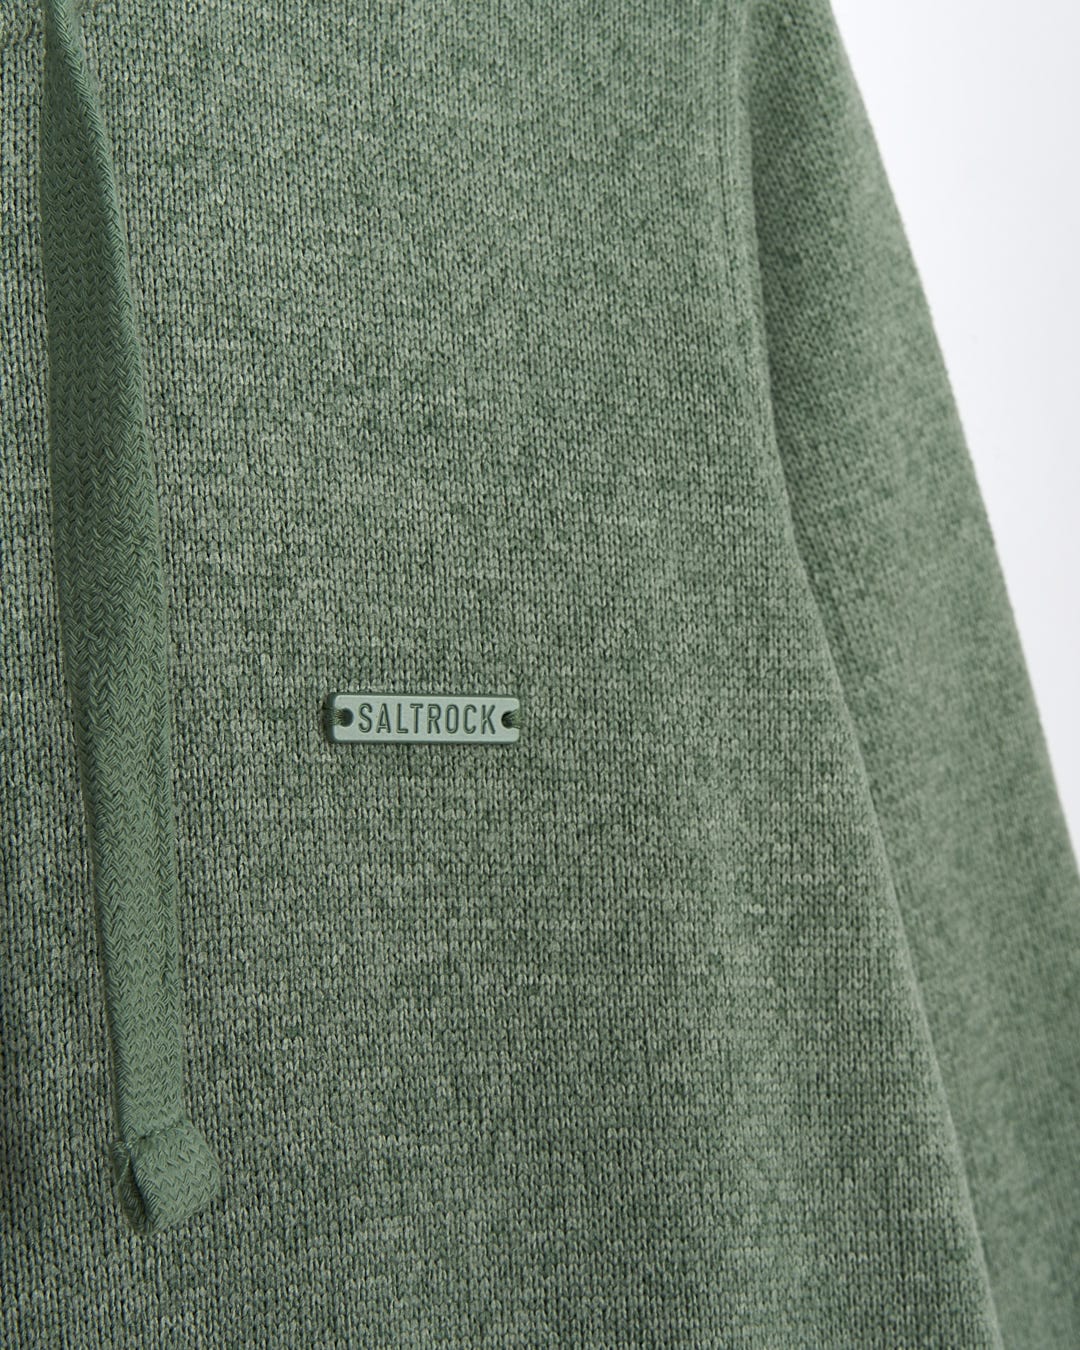 The back of a Galaksea - Womens 1/4 Zip Fleece - Light Green hoodie with a logo on it. (Saltrock)